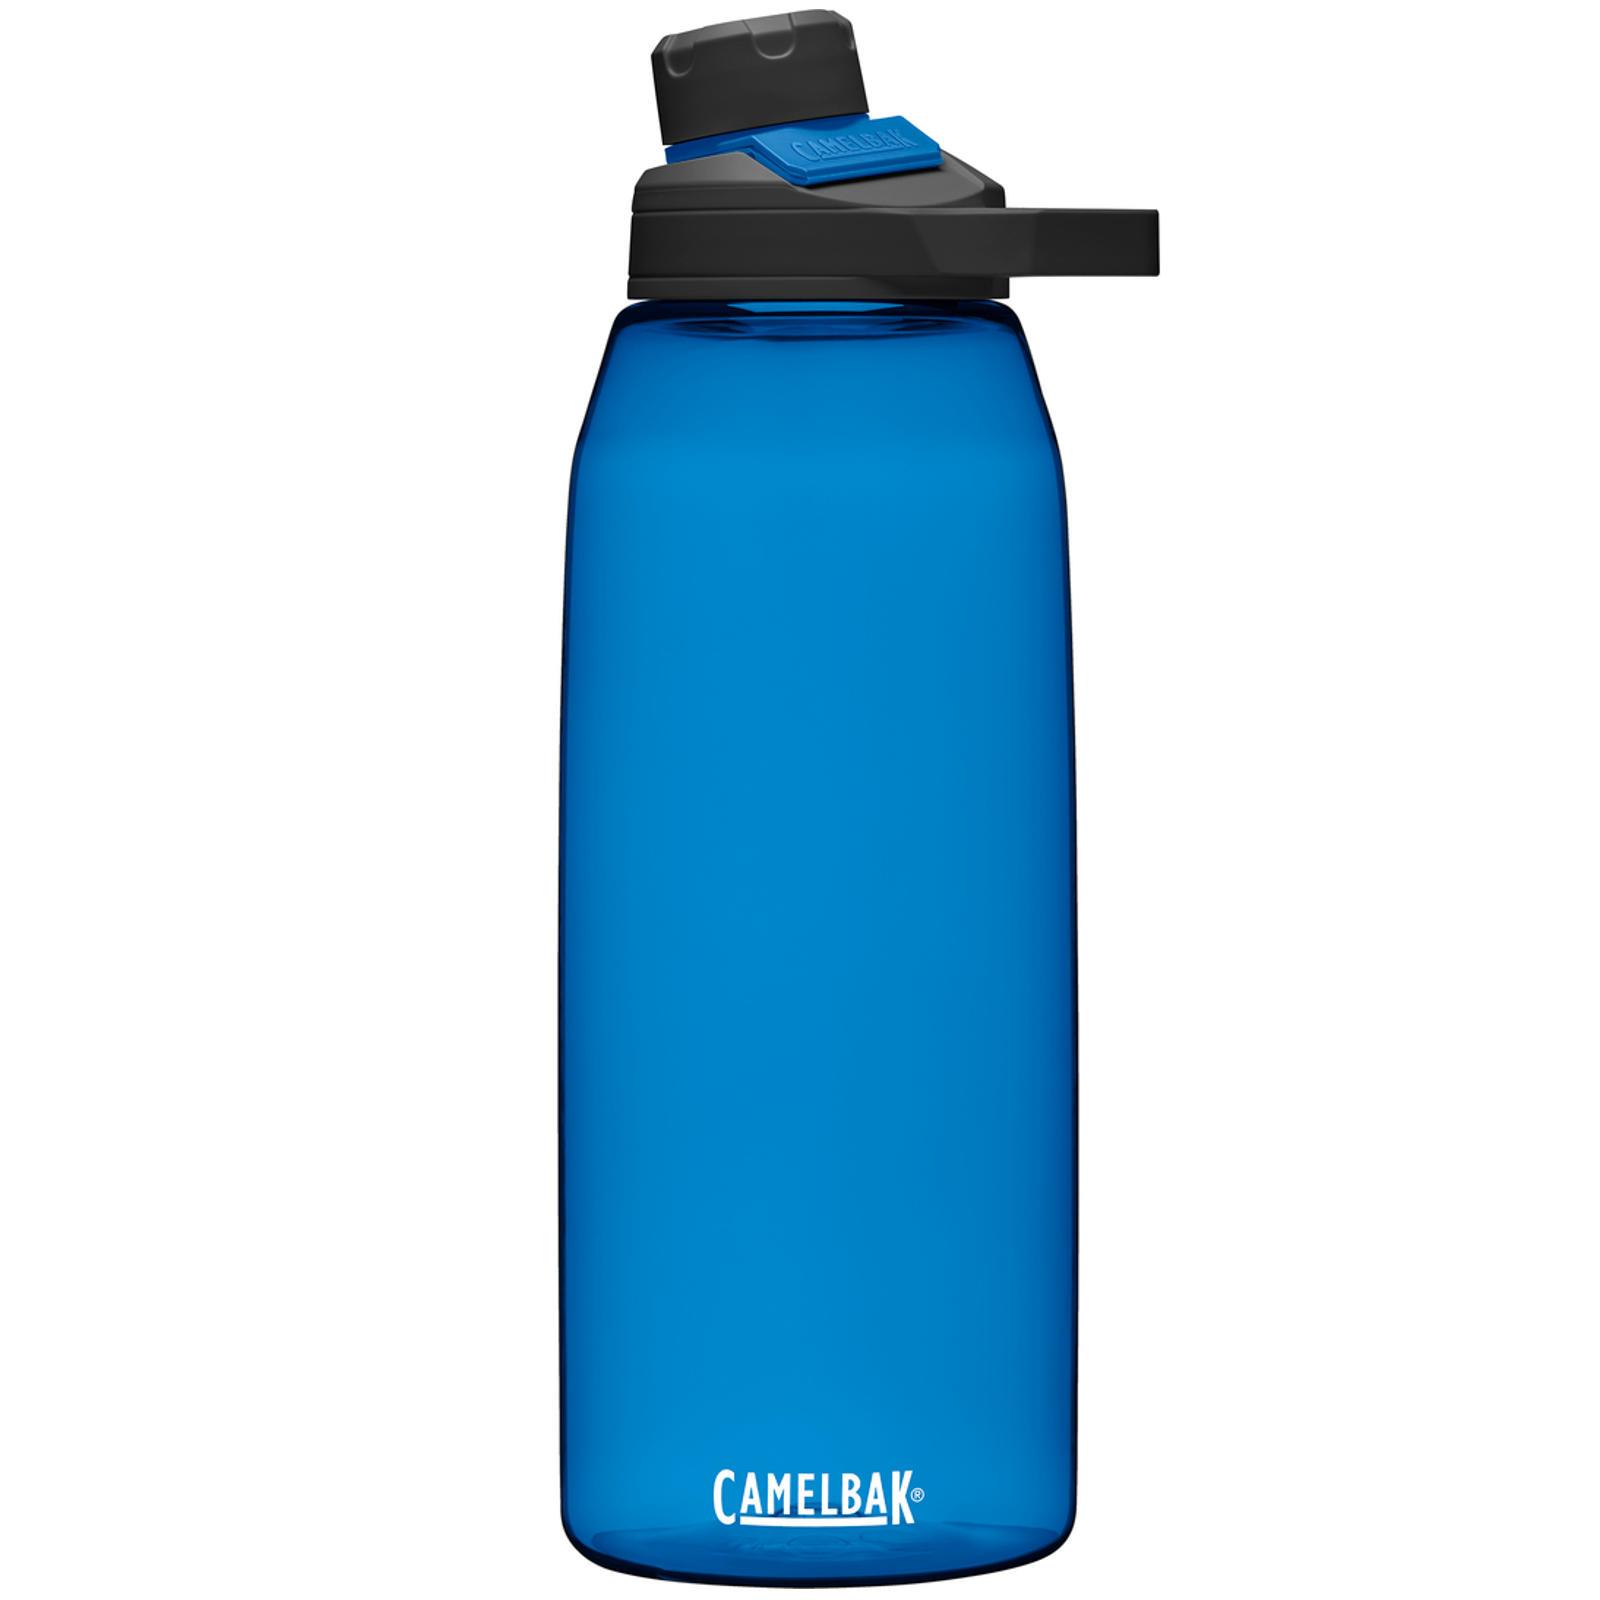 Camelbak Drinking Bottle Chute Mag Magnetic Clasp Water Bottle Tight 1.5  Liter